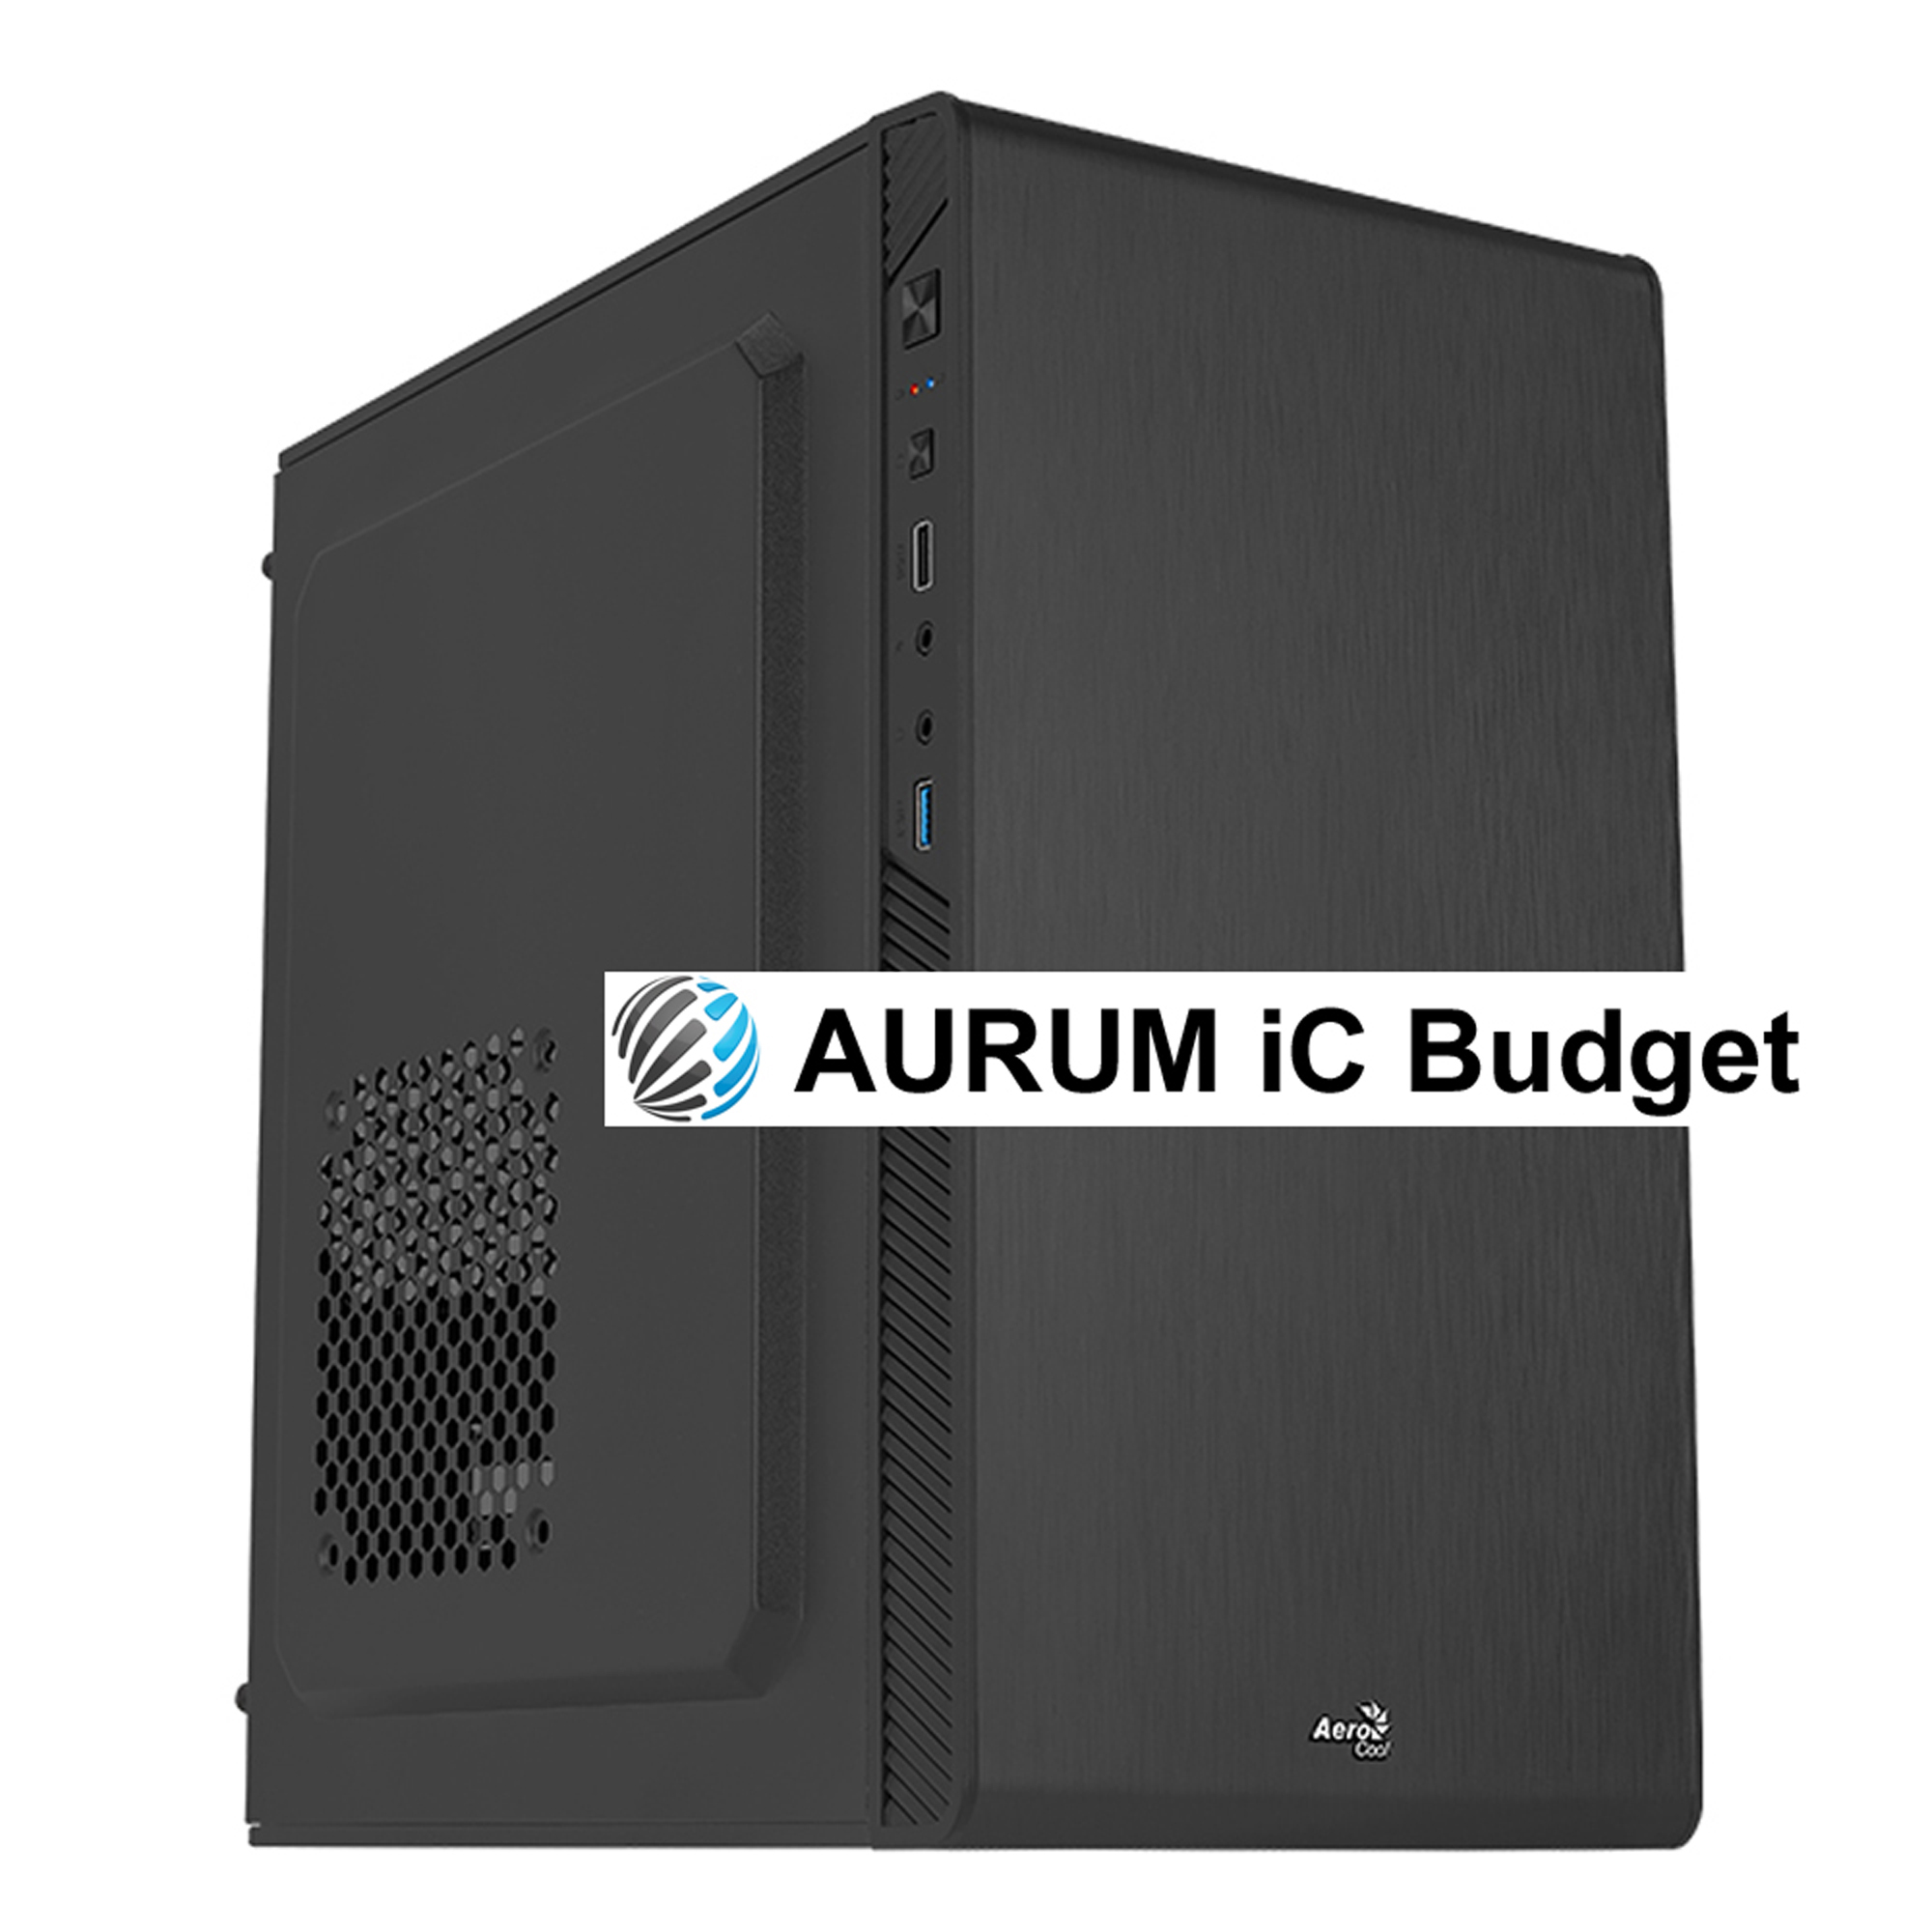 Budget PC-Desktop, 8 GB Linux GB iC HYPTECH 240 SSD RAM, LibreOffice, AURUM I, mit Ubuntu